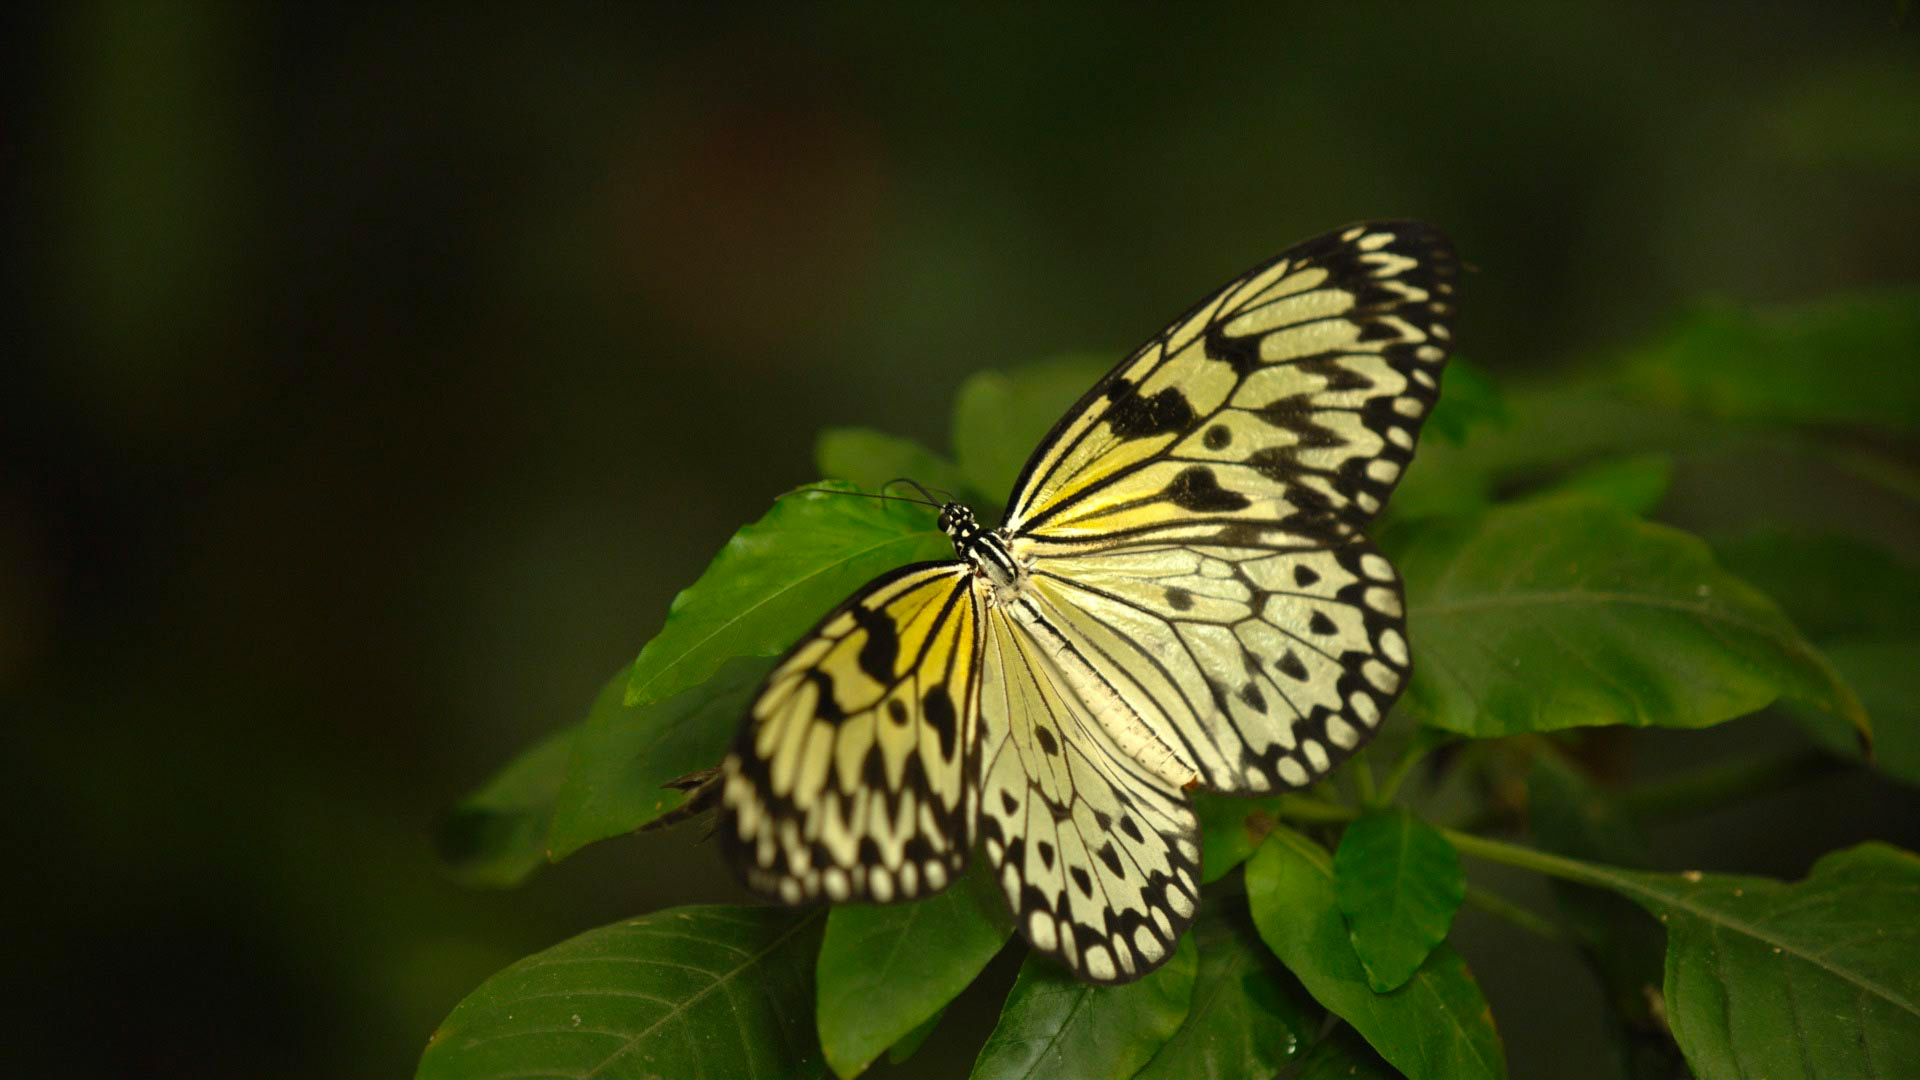 A tropical butterfly on leaf. Deerfield, MA.